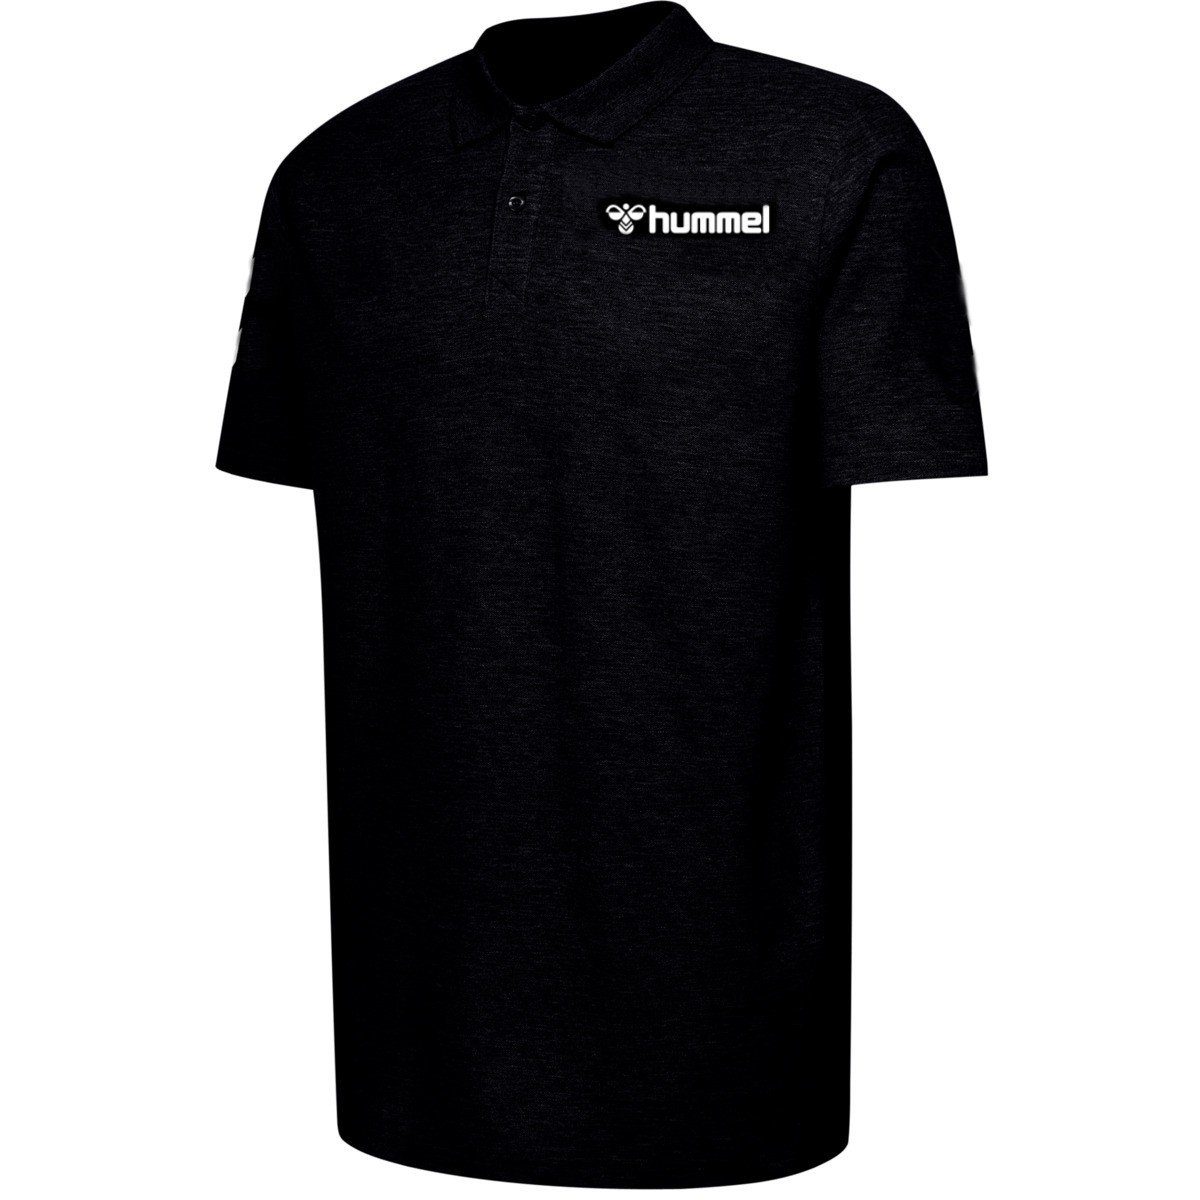 COTTON hummel - POLO Poloshirts HMLGOMover 2001 Herren BLACK T-Shirt